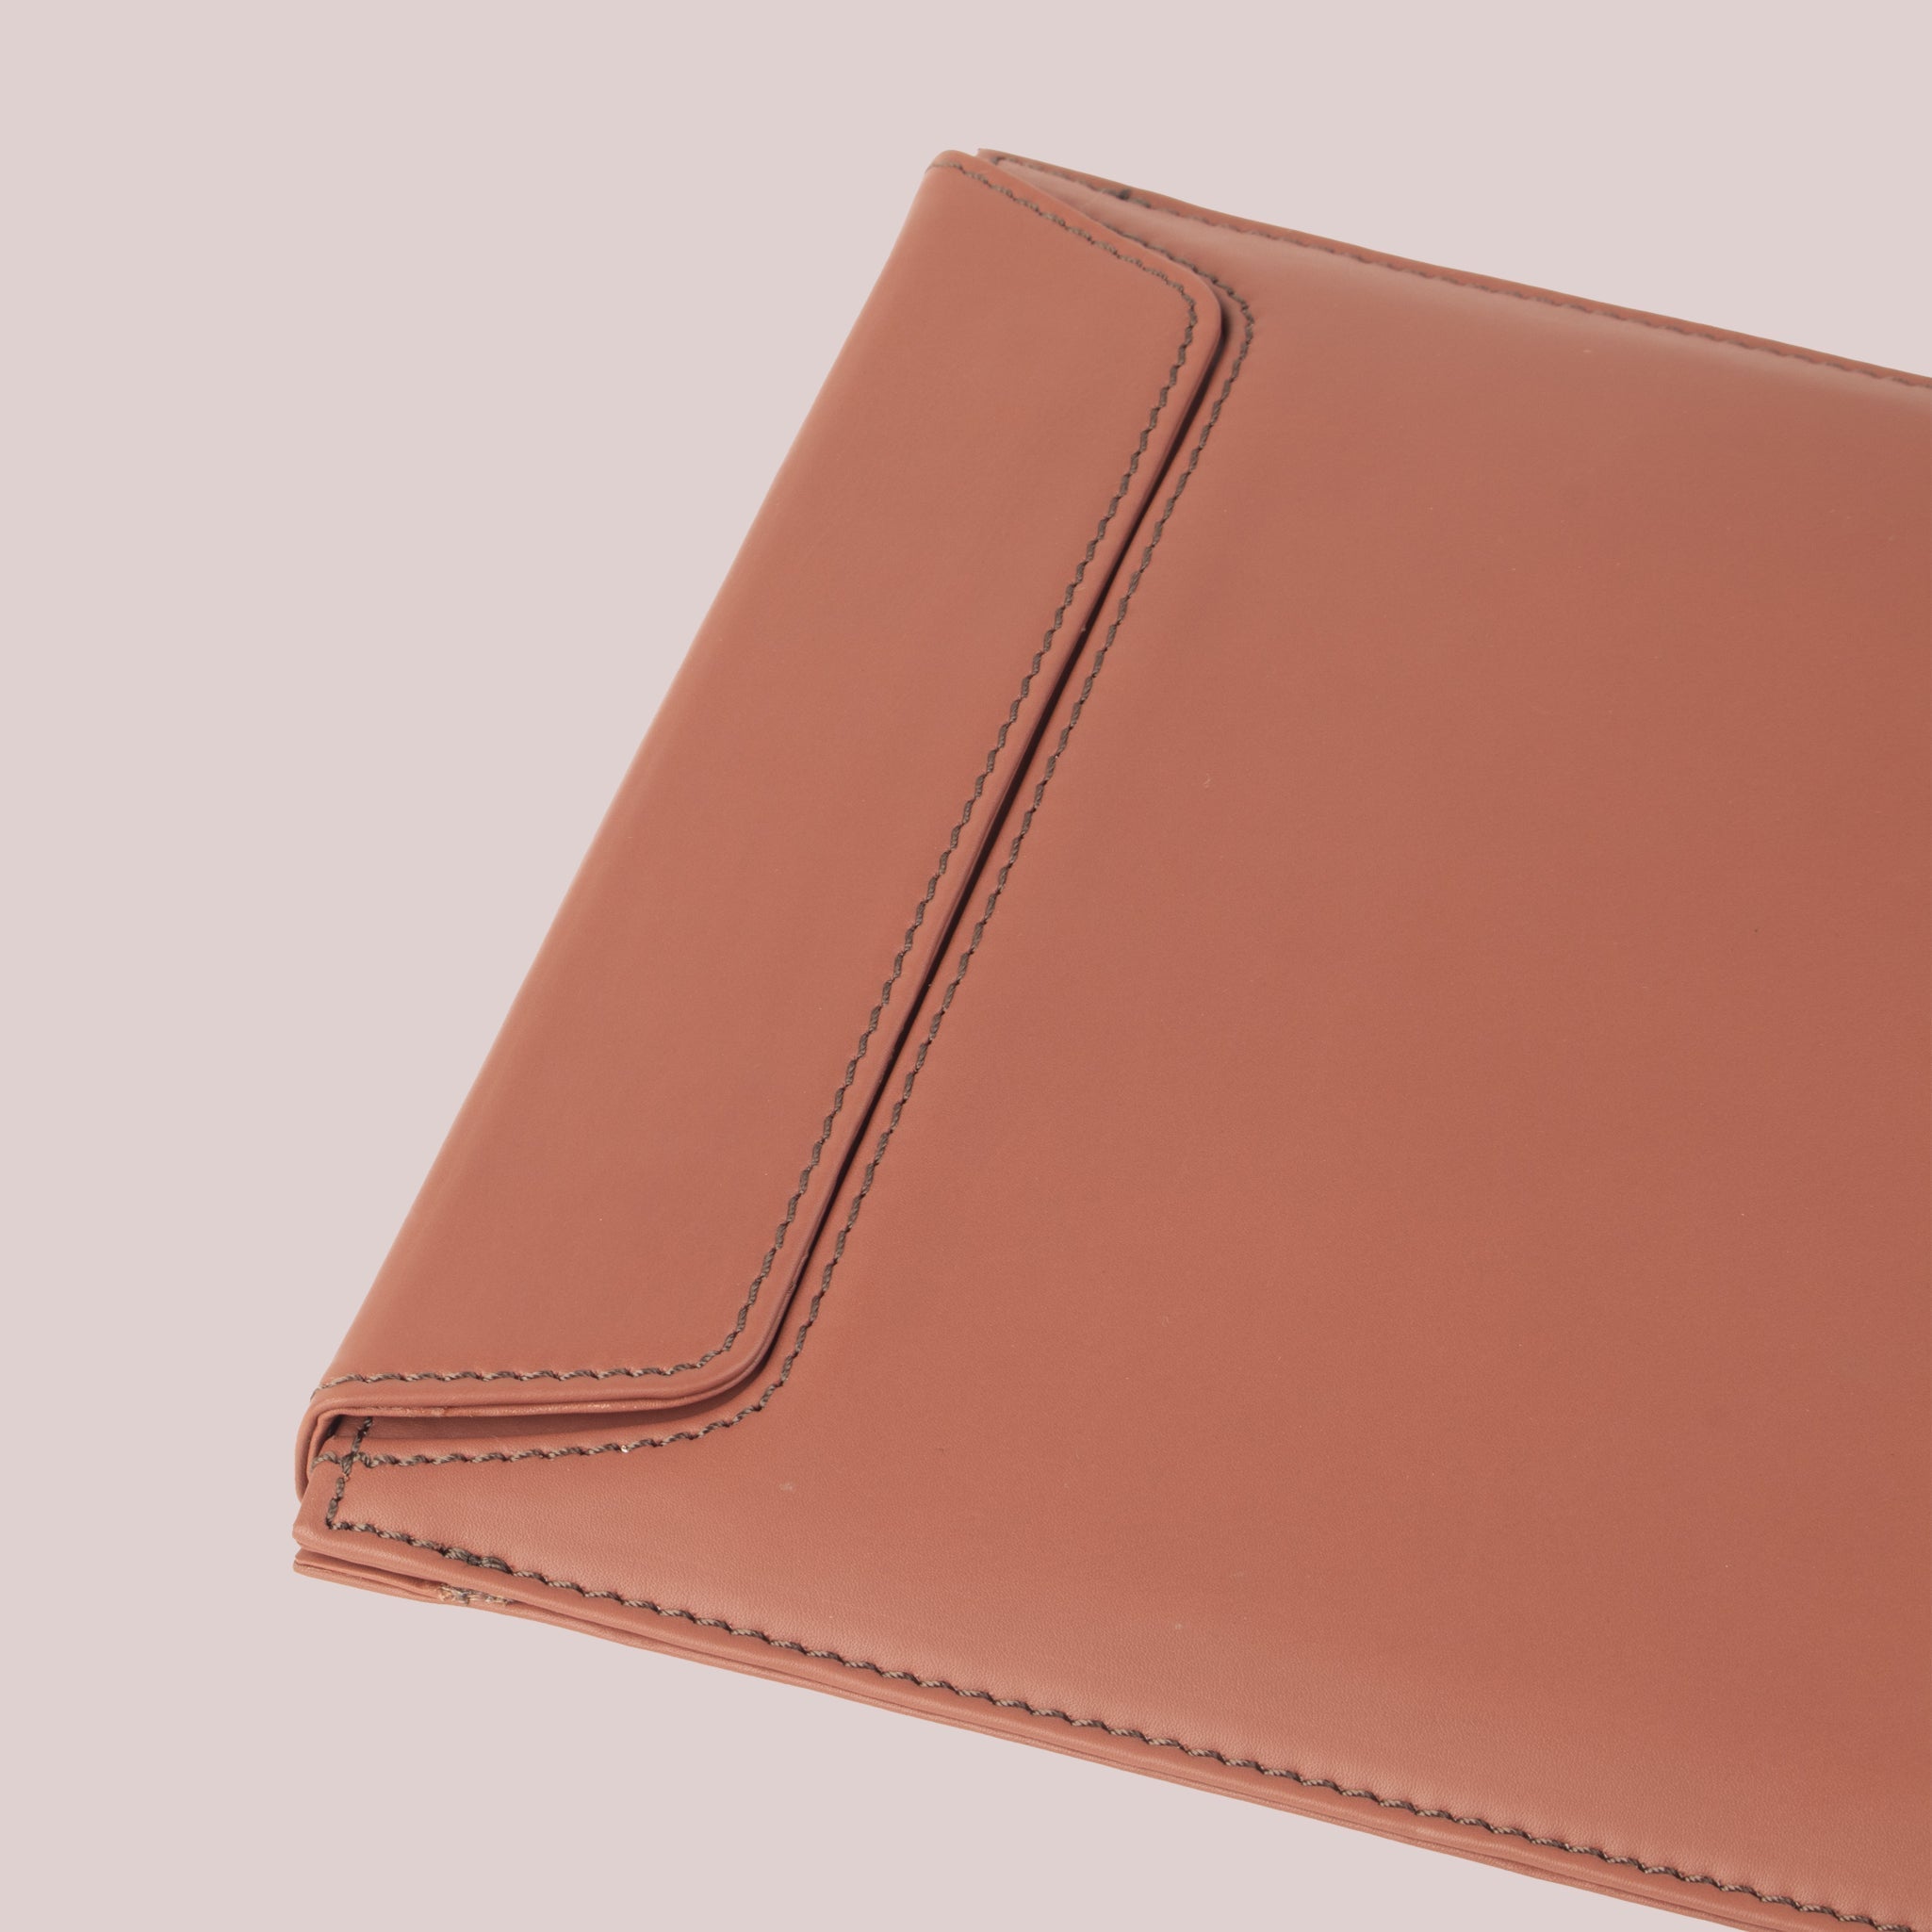 Buy tan leather sleeve for Macbook online